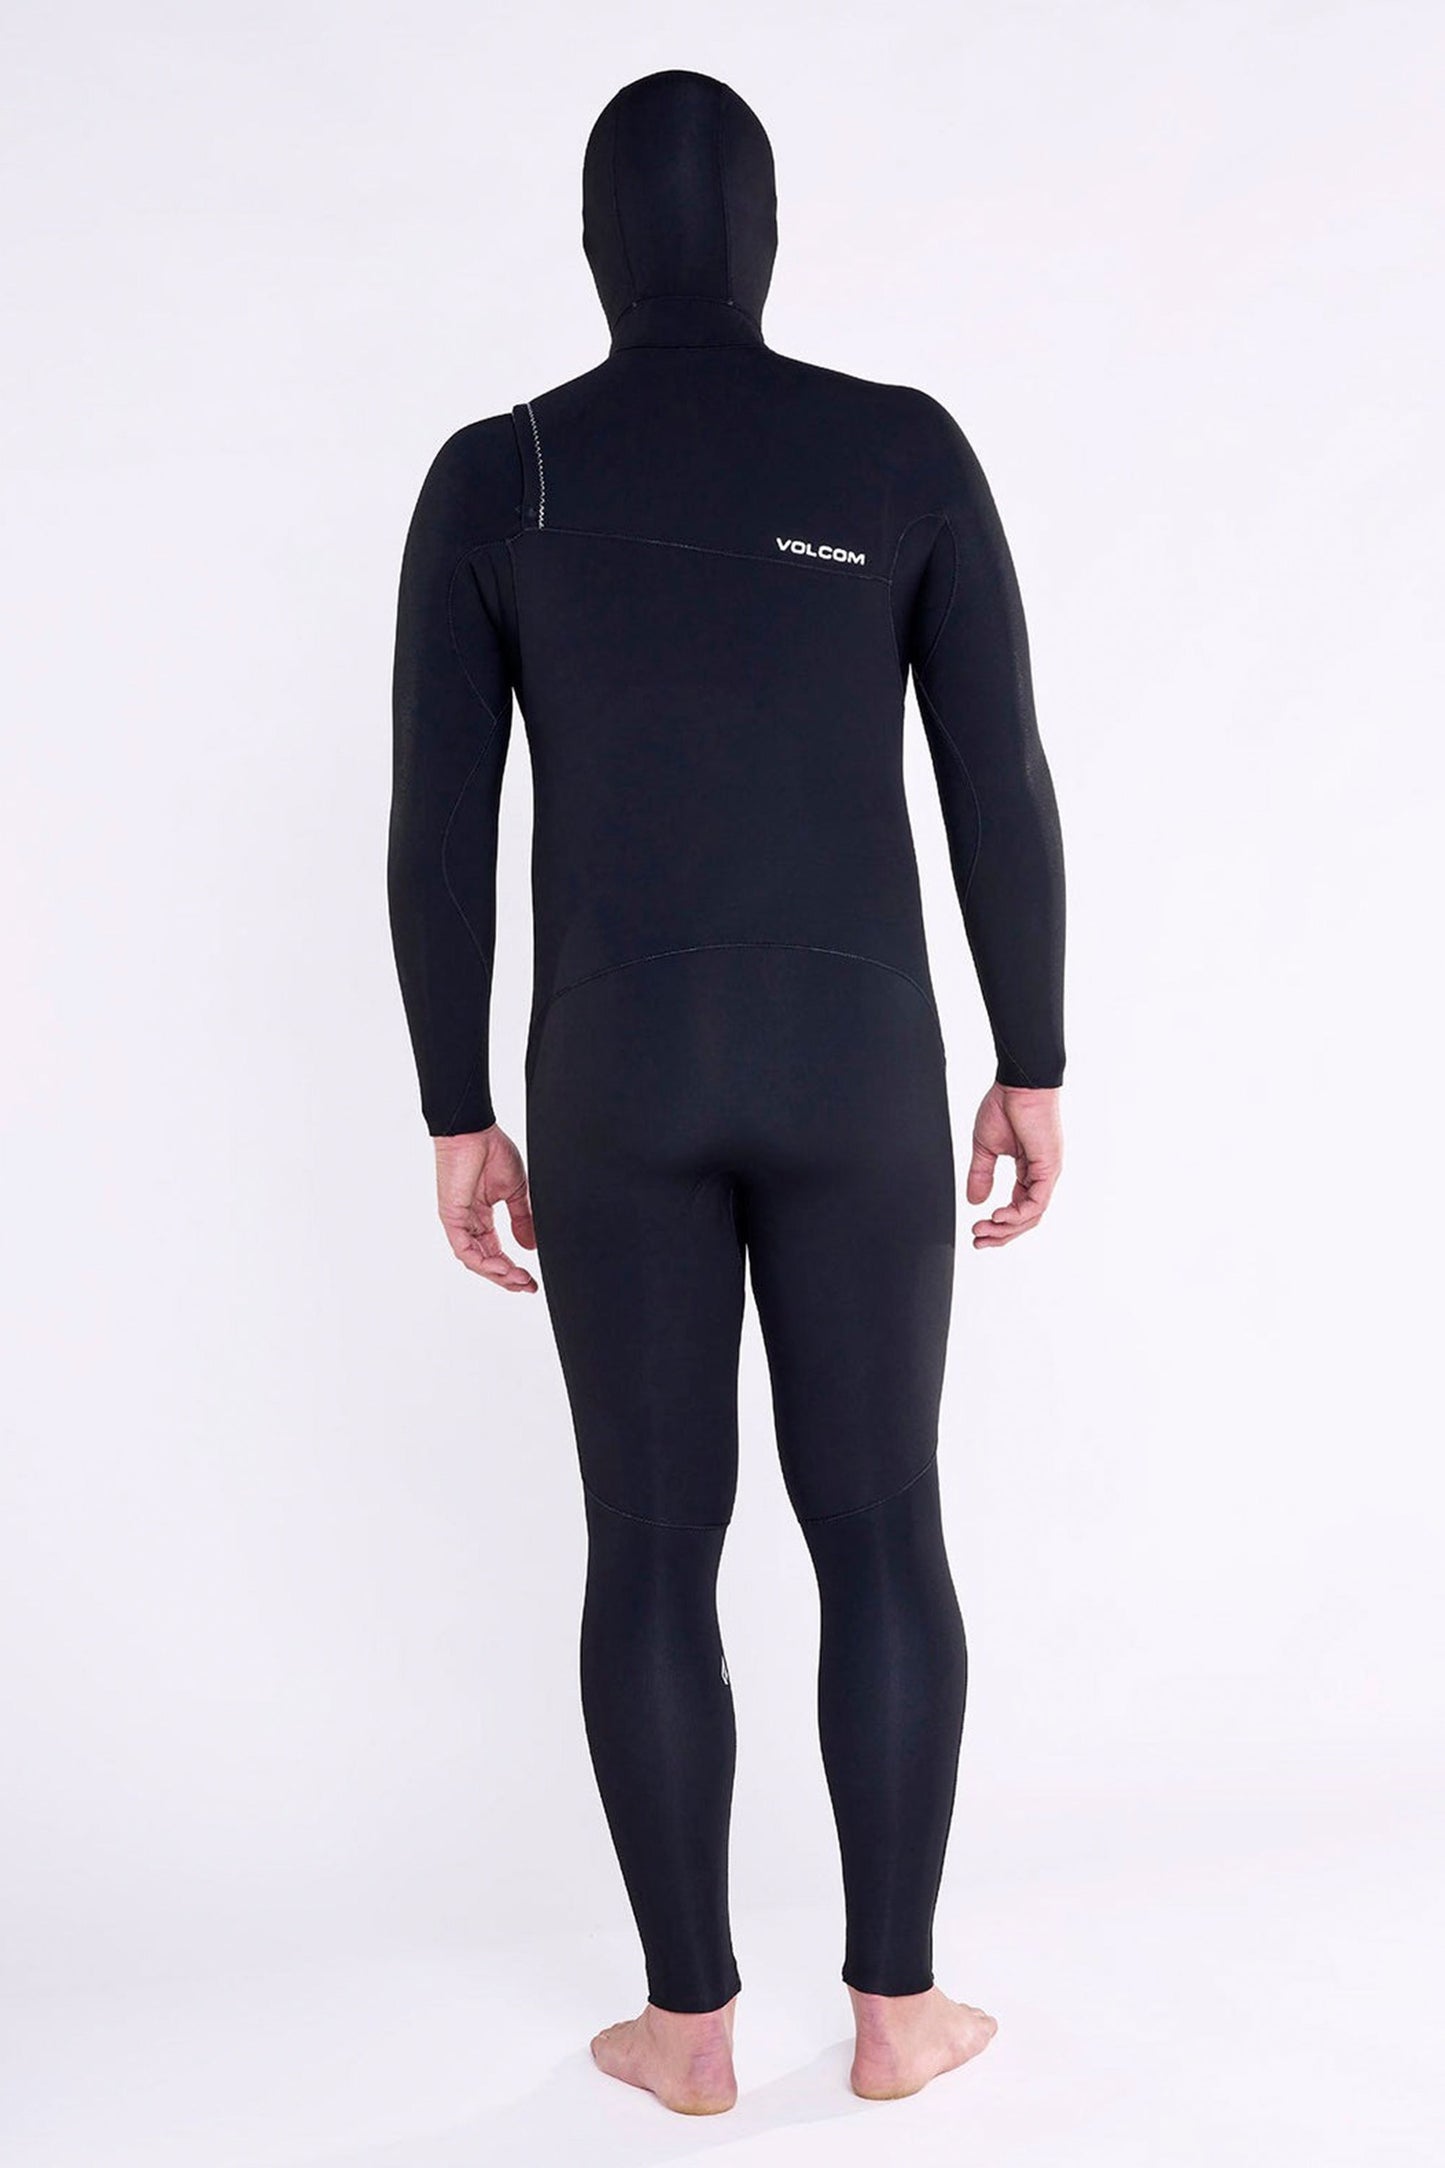 Pukas-Surf-Shop-Volcom-Wetsuit-hooded-wetsuit-5-4-3-mm-chest-zip